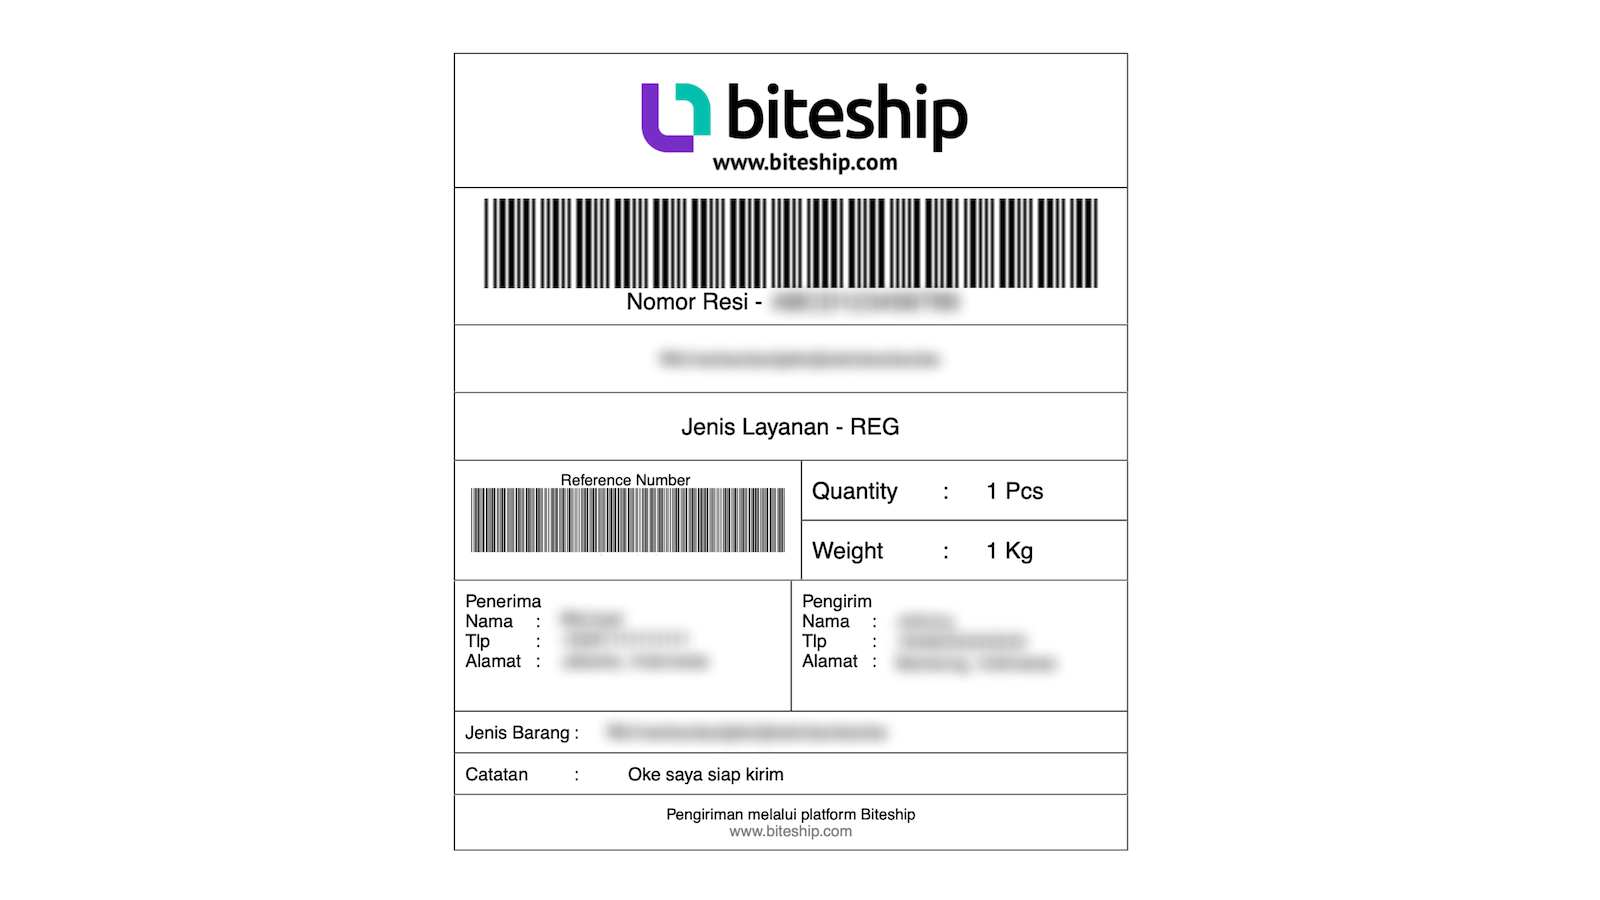 Etiqueta de envío automática proporcionada por Biteship